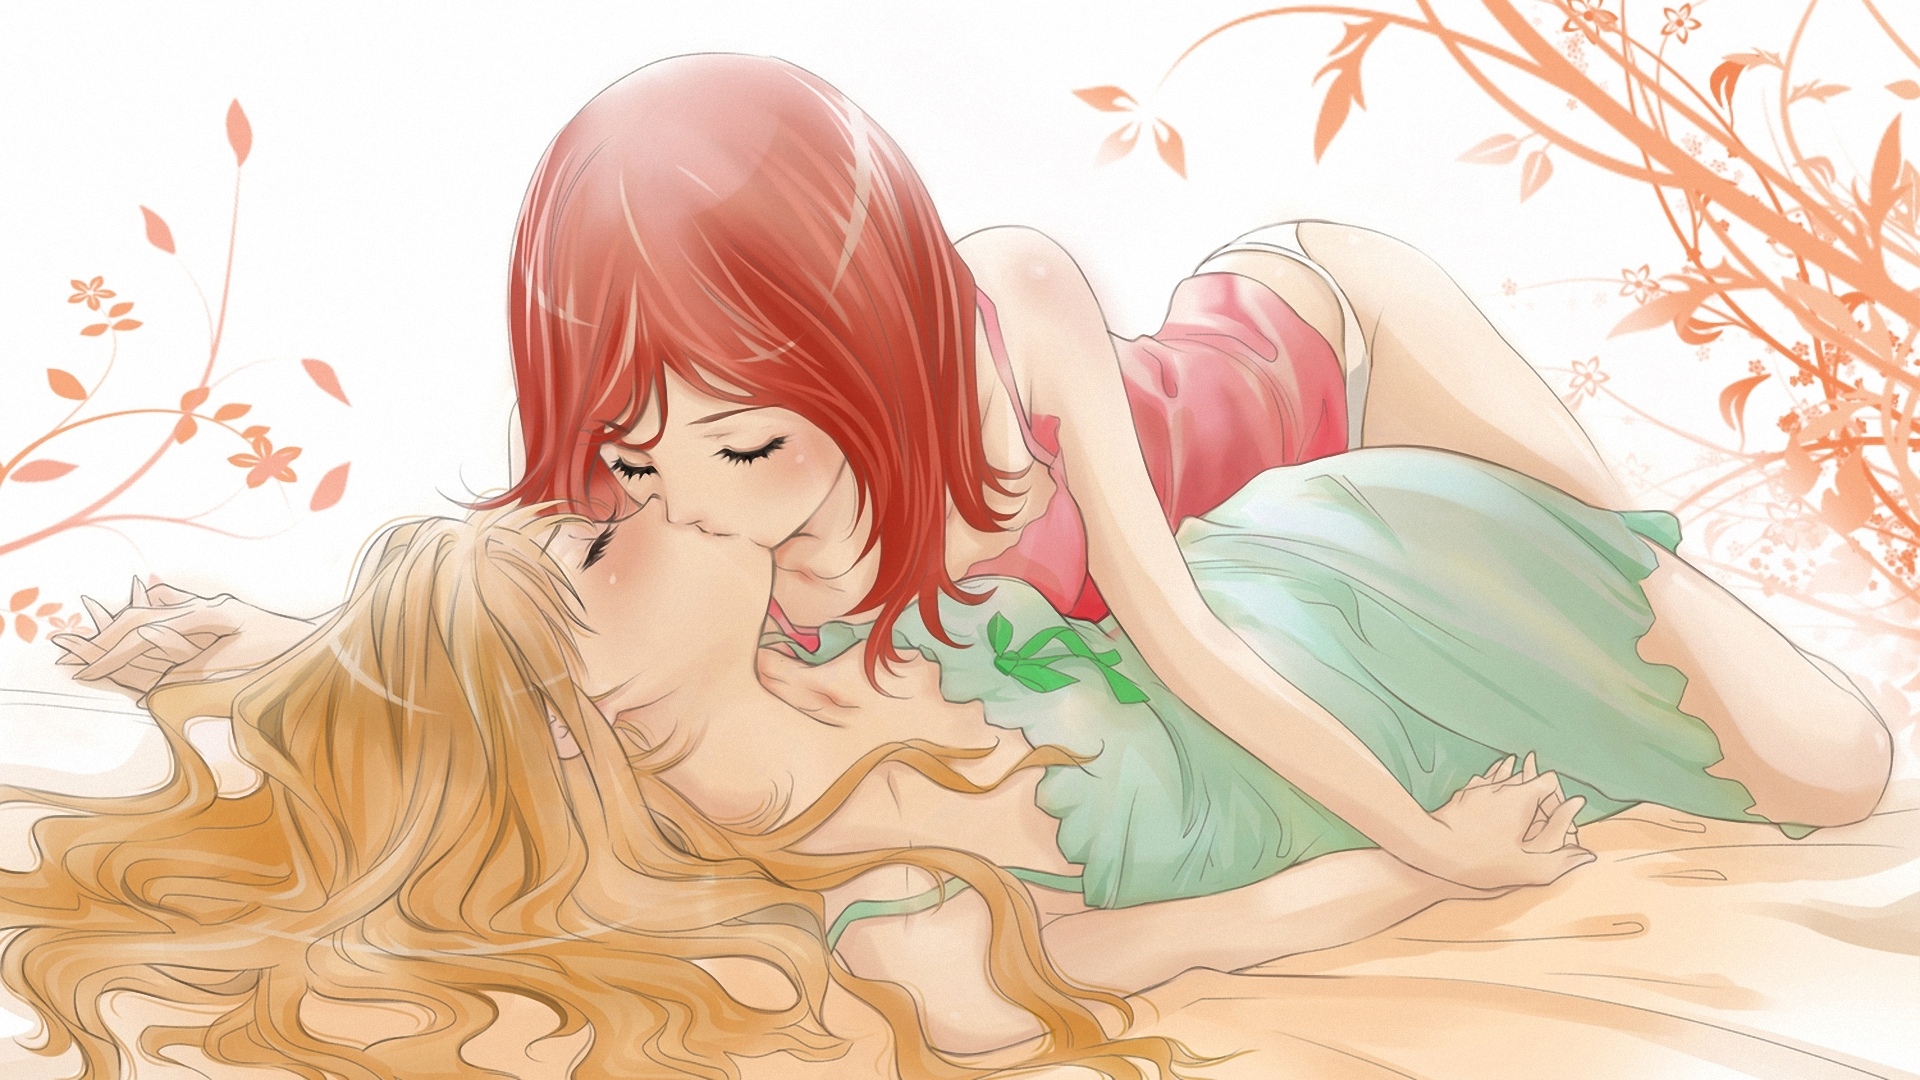 Anime lesbian love kissing